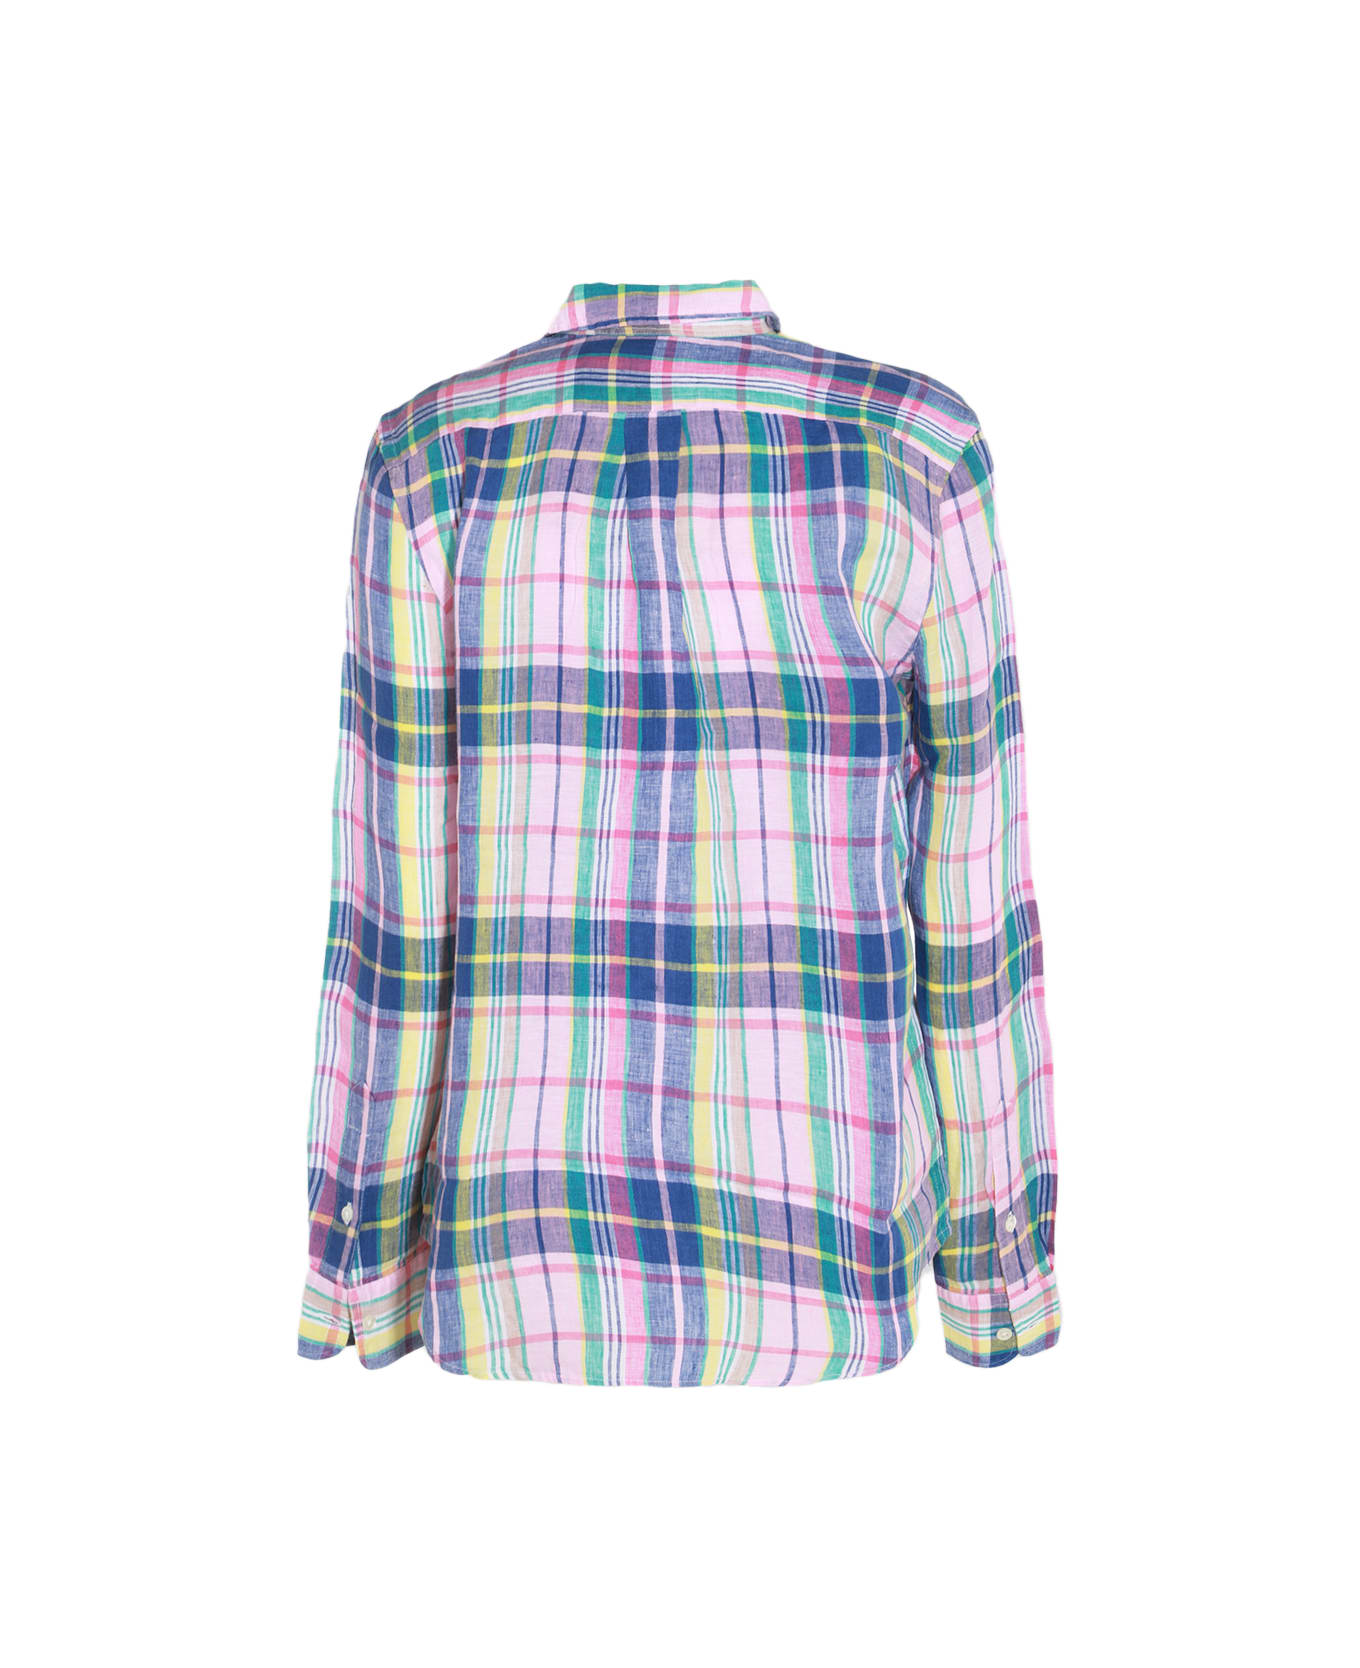 Polo Ralph Lauren Multicolour Linen Shirt - PINK/BLUE/MULTI